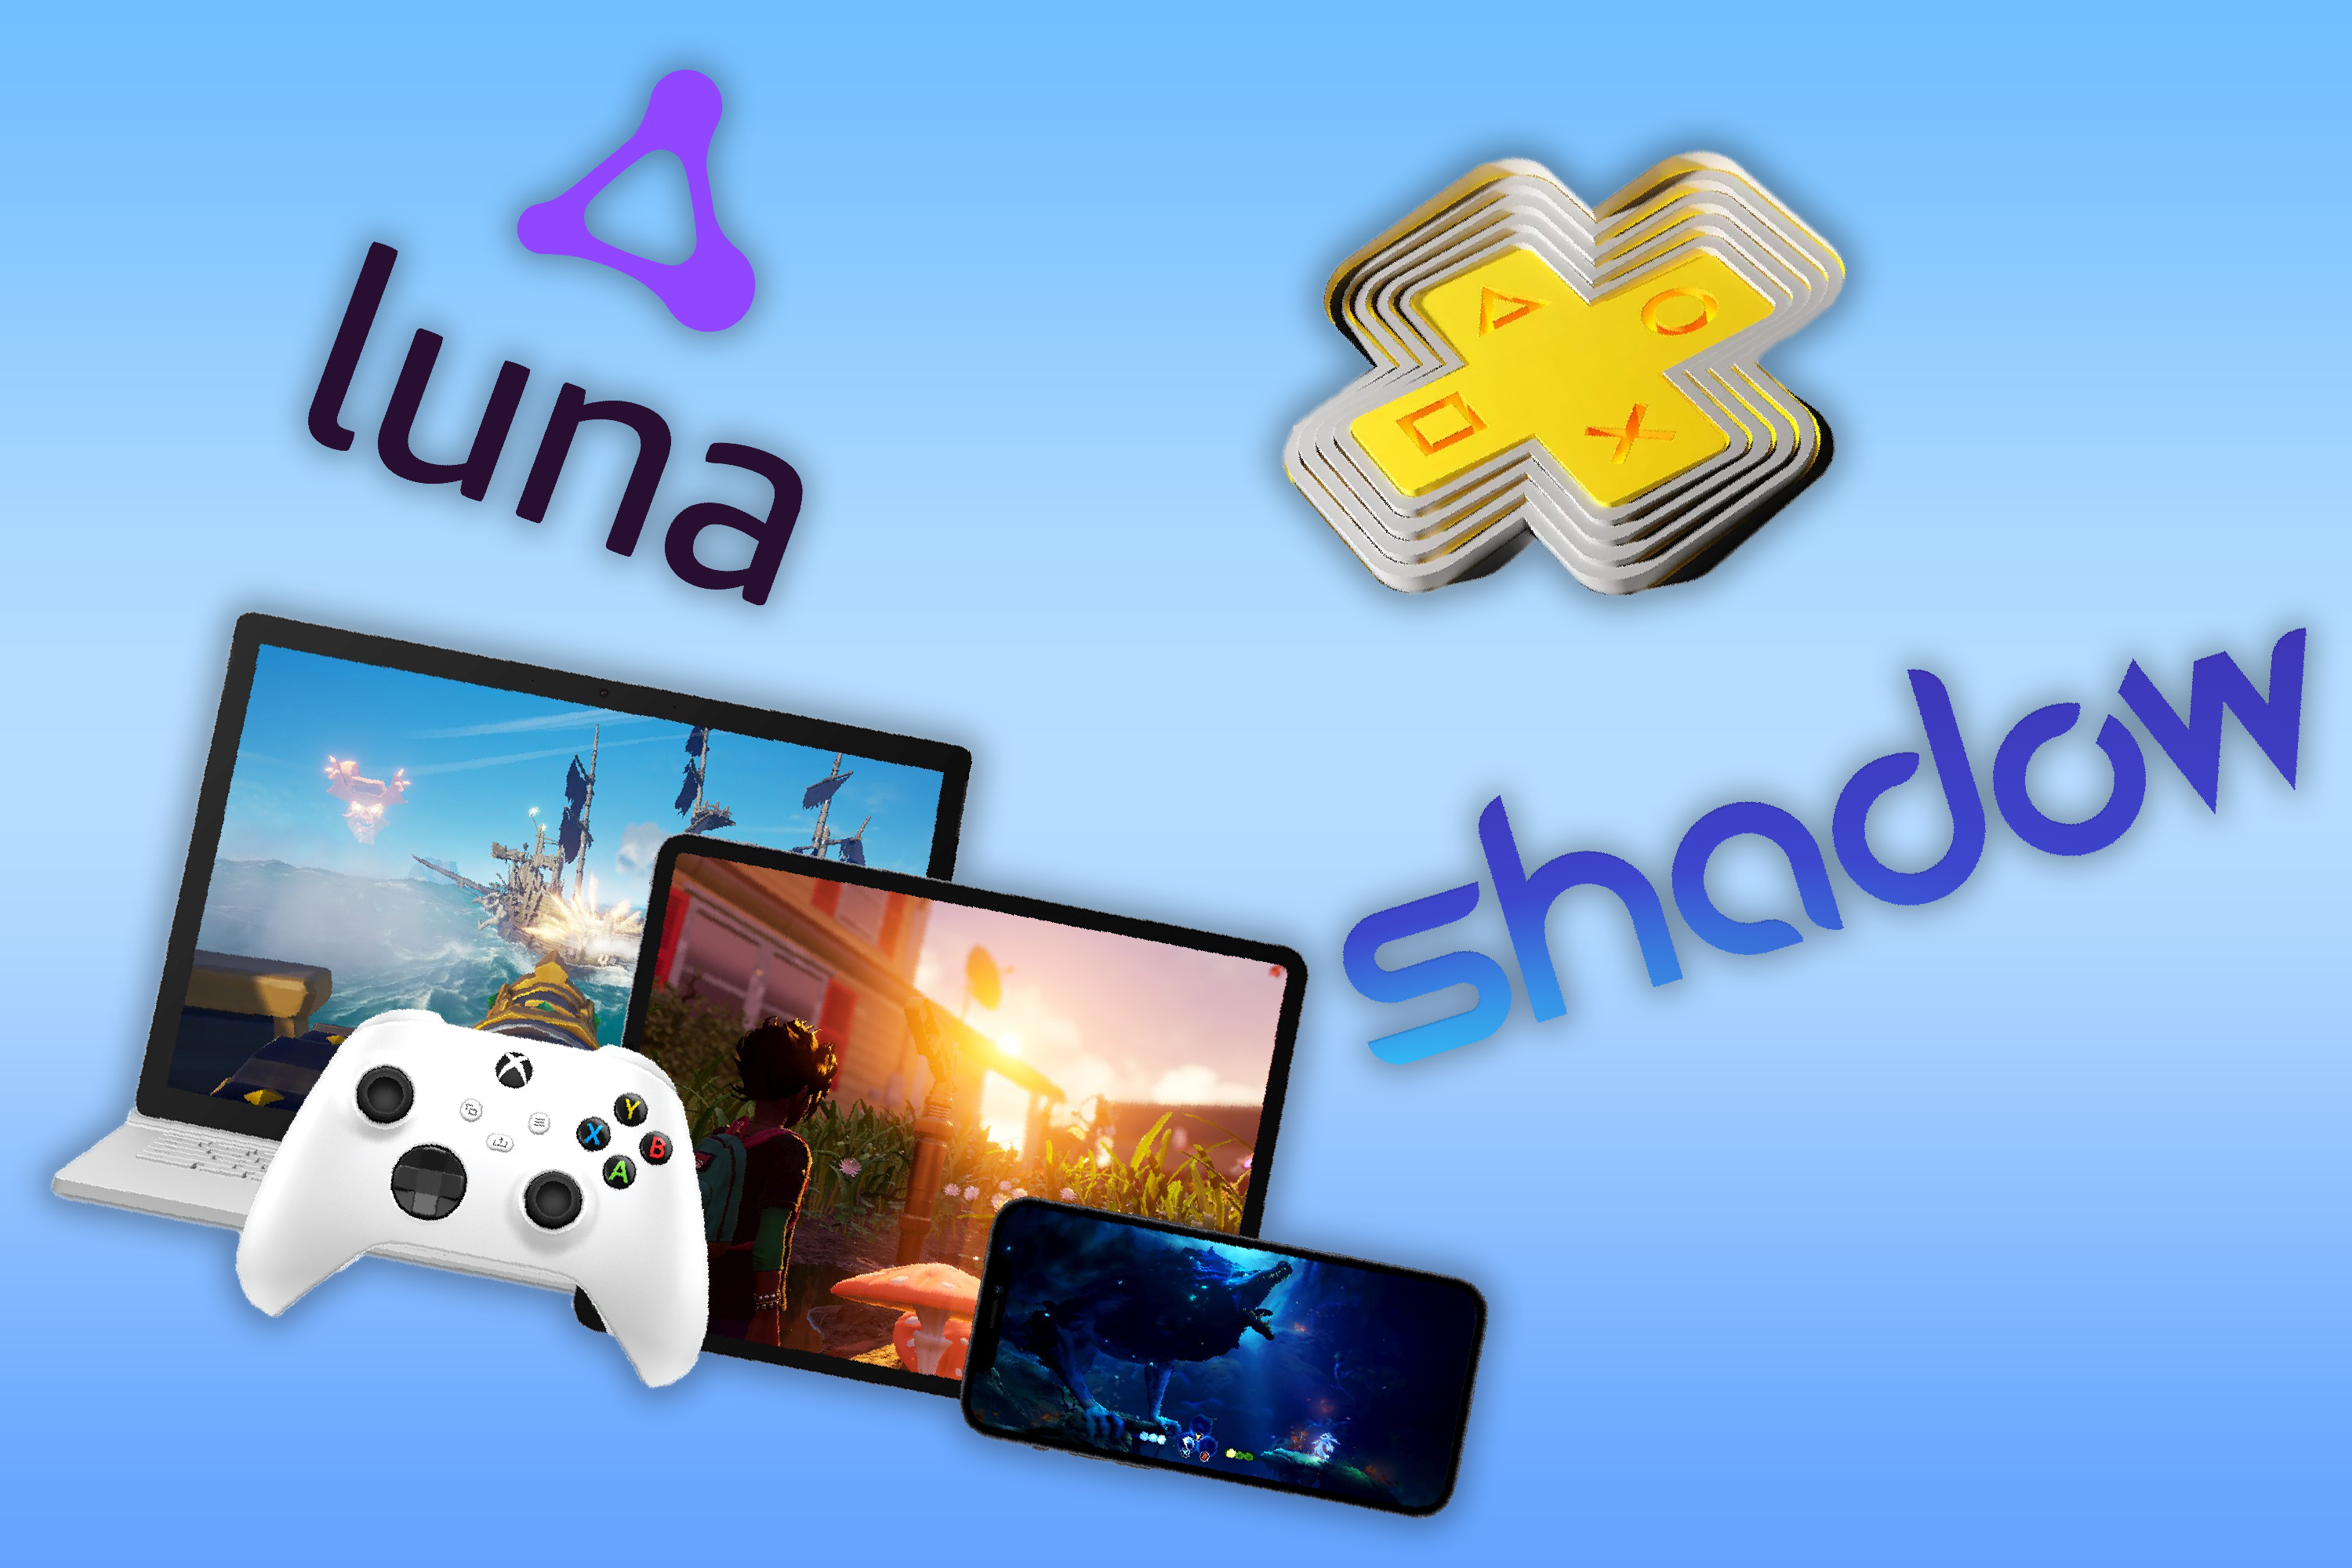 s cloud gaming platform 'Luna' may add Epic Games' Fortnite